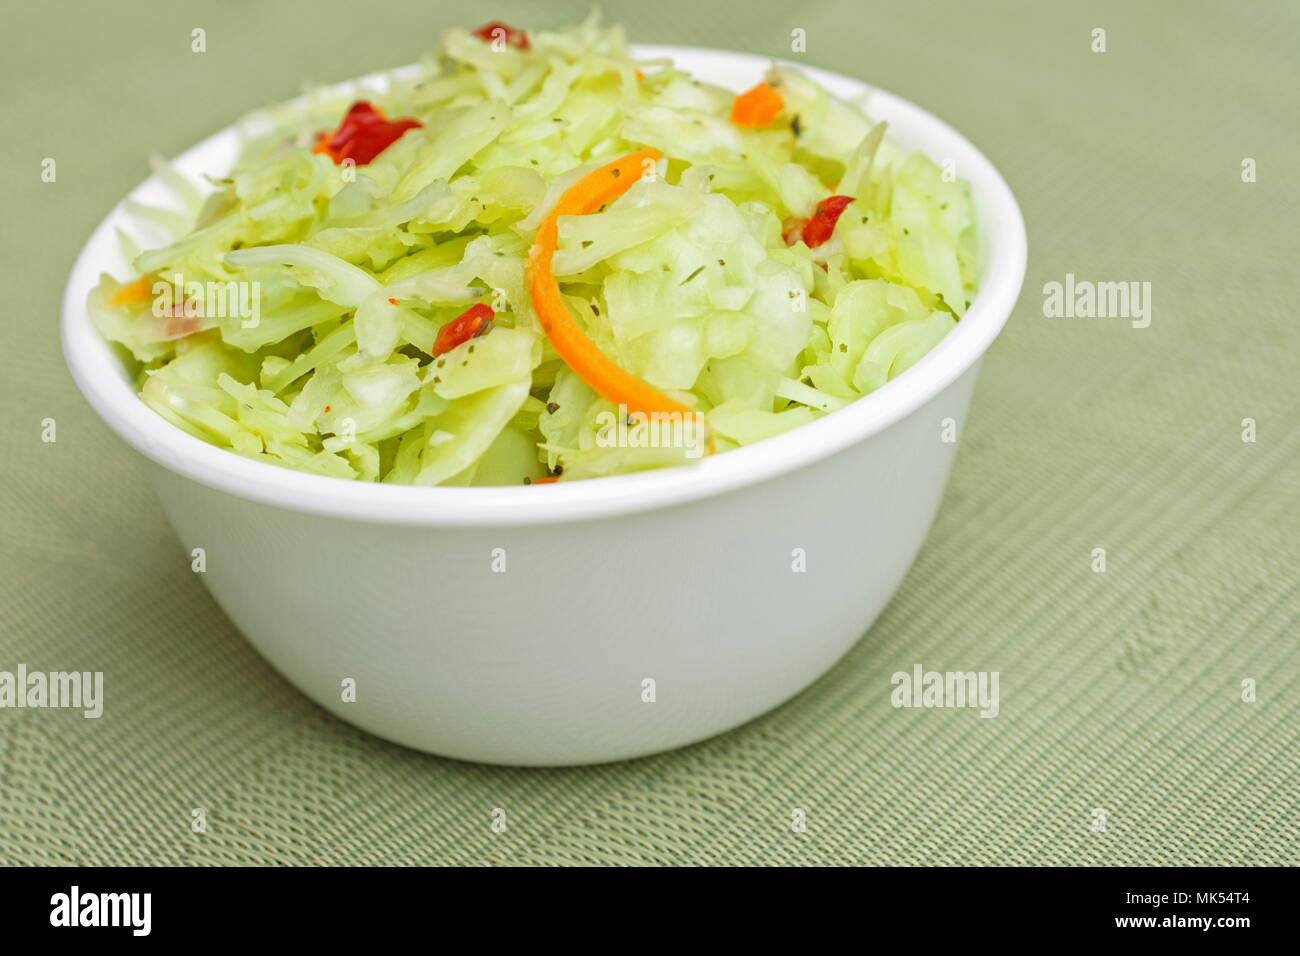 Coleslaw, bianco ciotola con insalata coleslaw Foto Stock